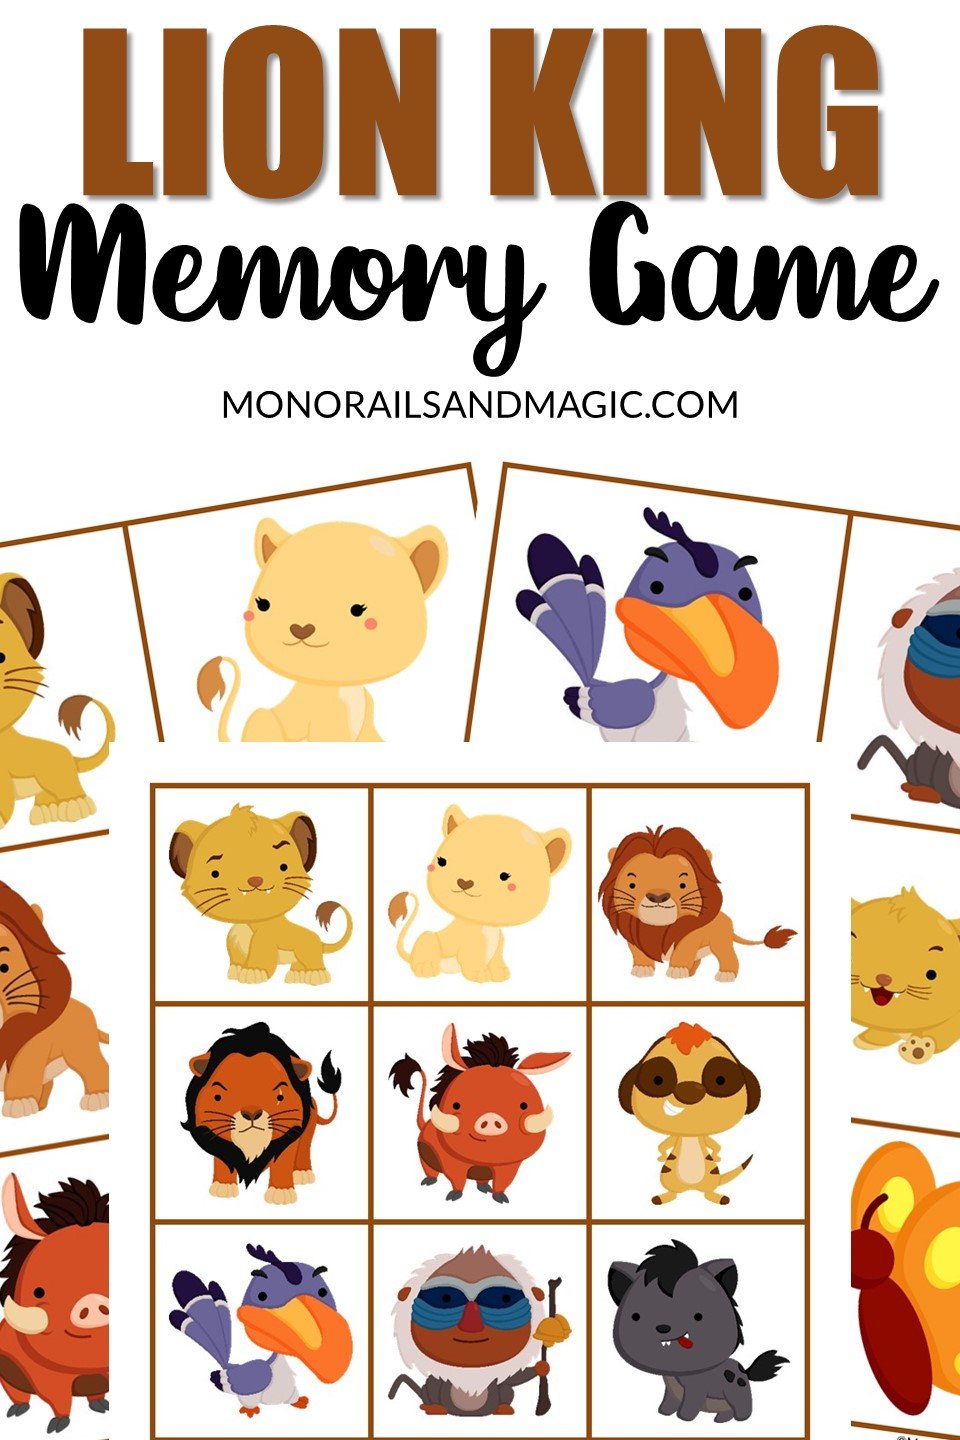 Free printable Lion King memory game for kids.